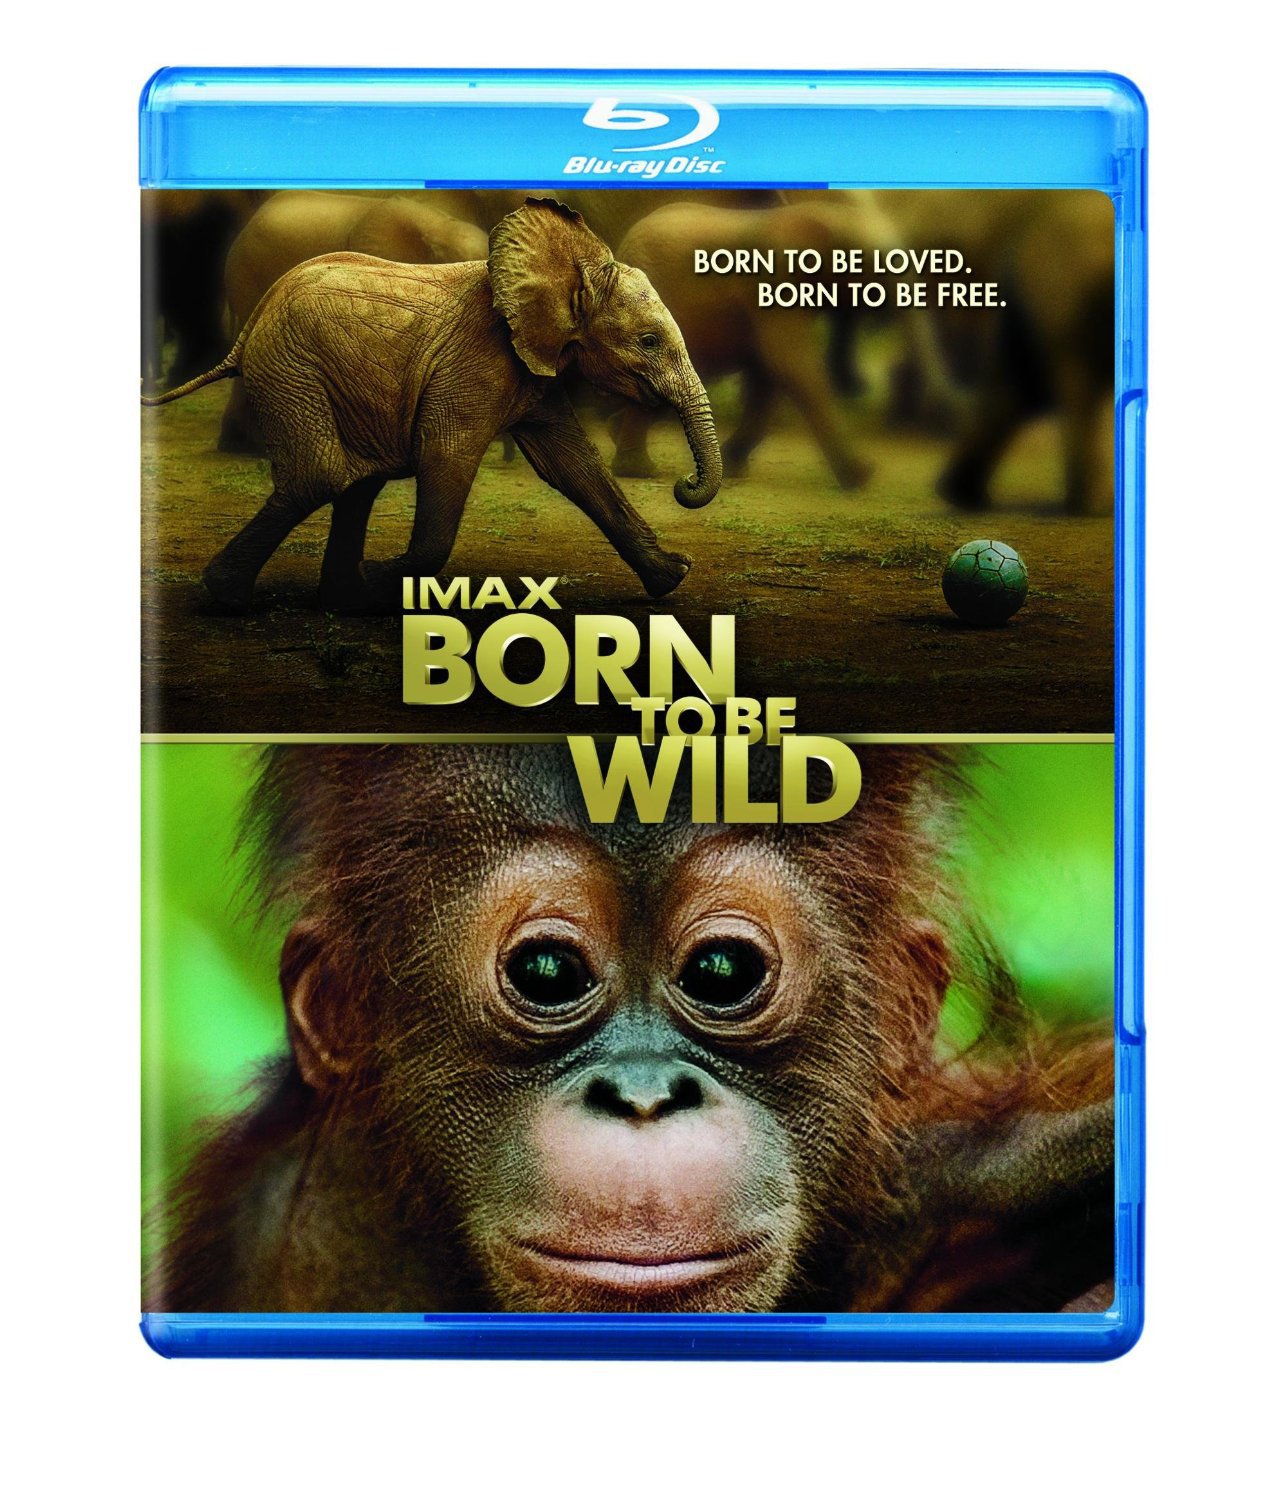 IMAX: Born to Be Wild